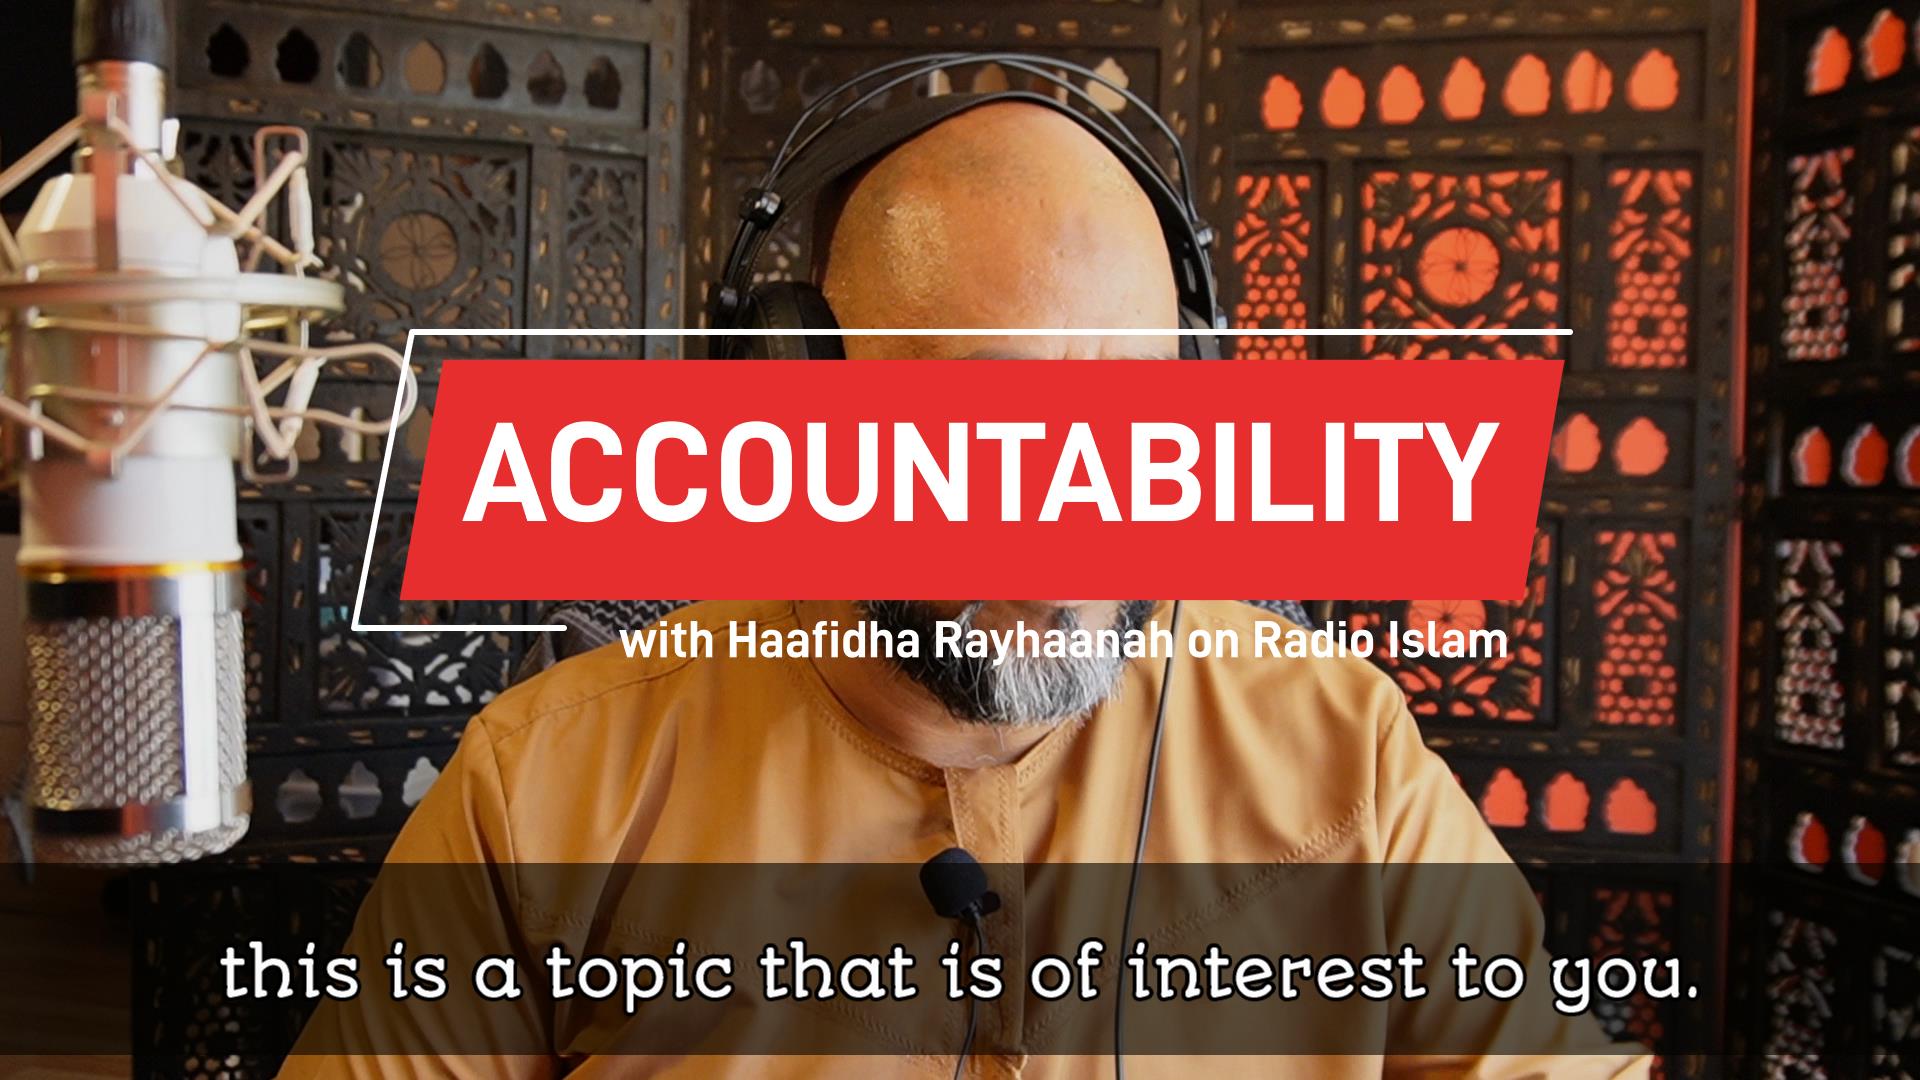 The magic of accountability